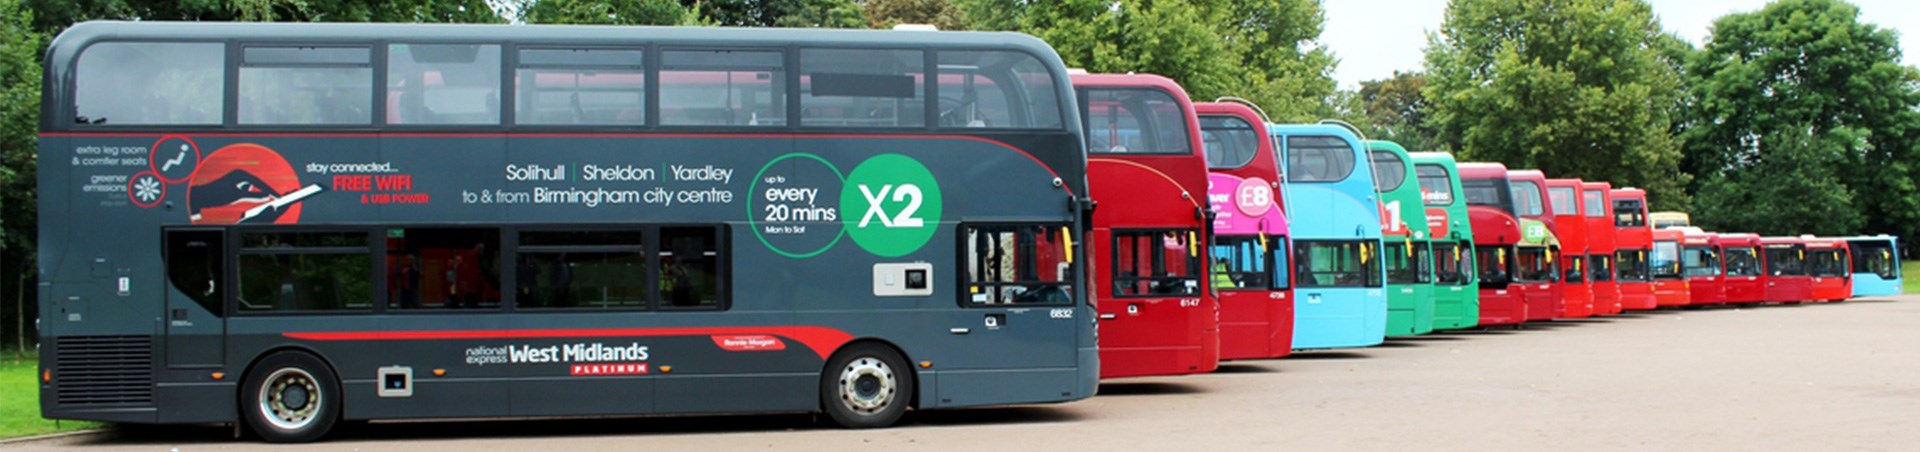 travel west midlands bus routes